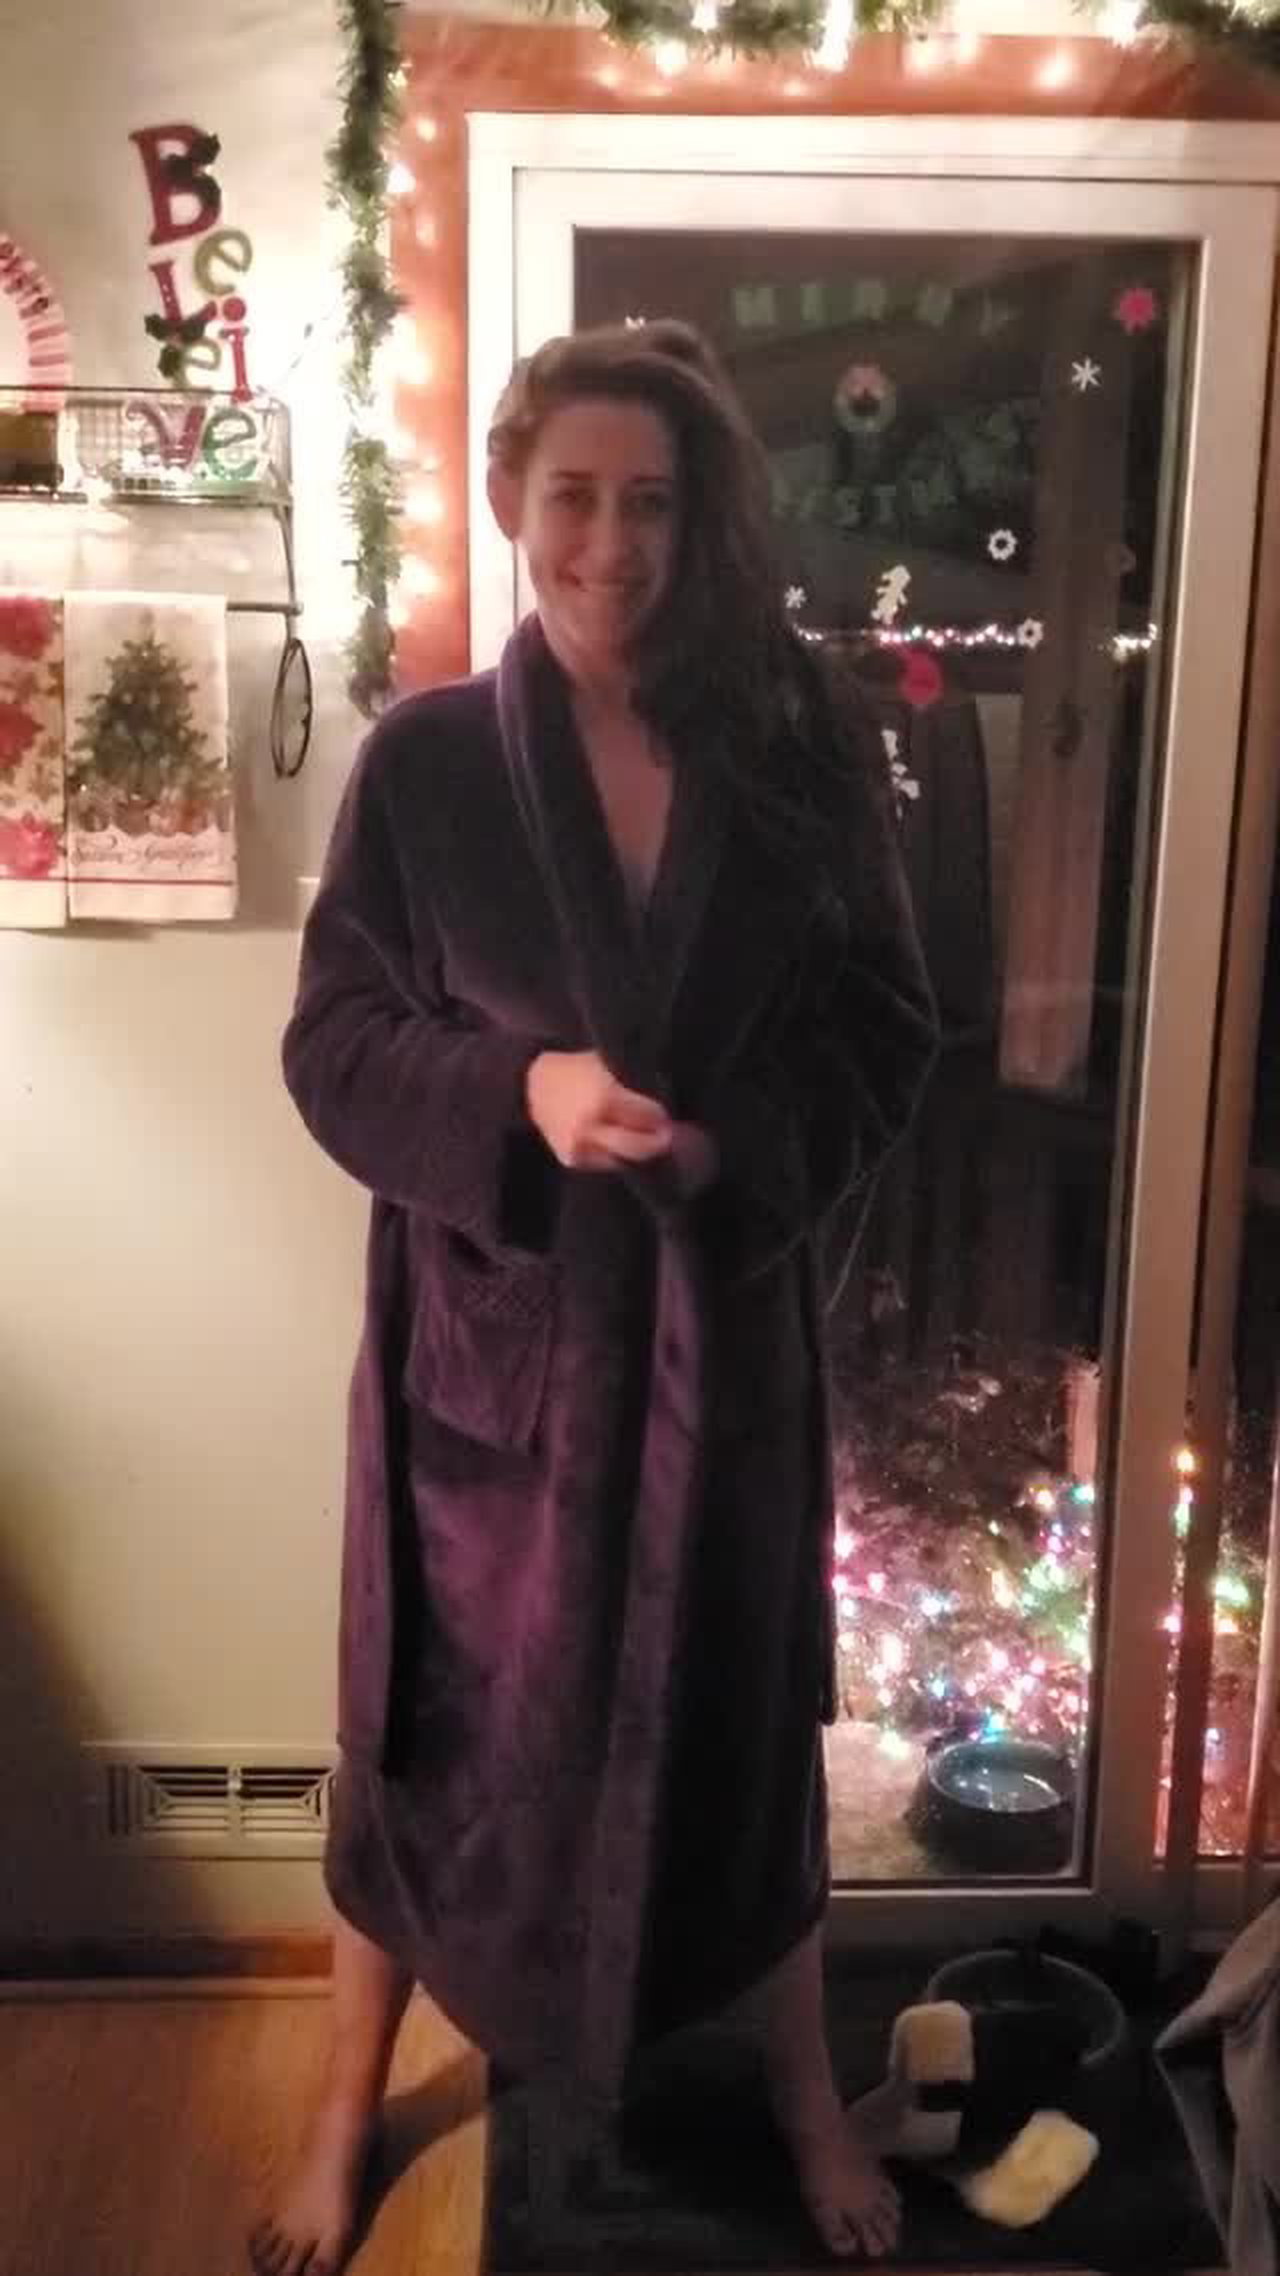 Under robe reveal. Be nice please. (Reddit- RoxyKnightx) -- EroticaSearch.net